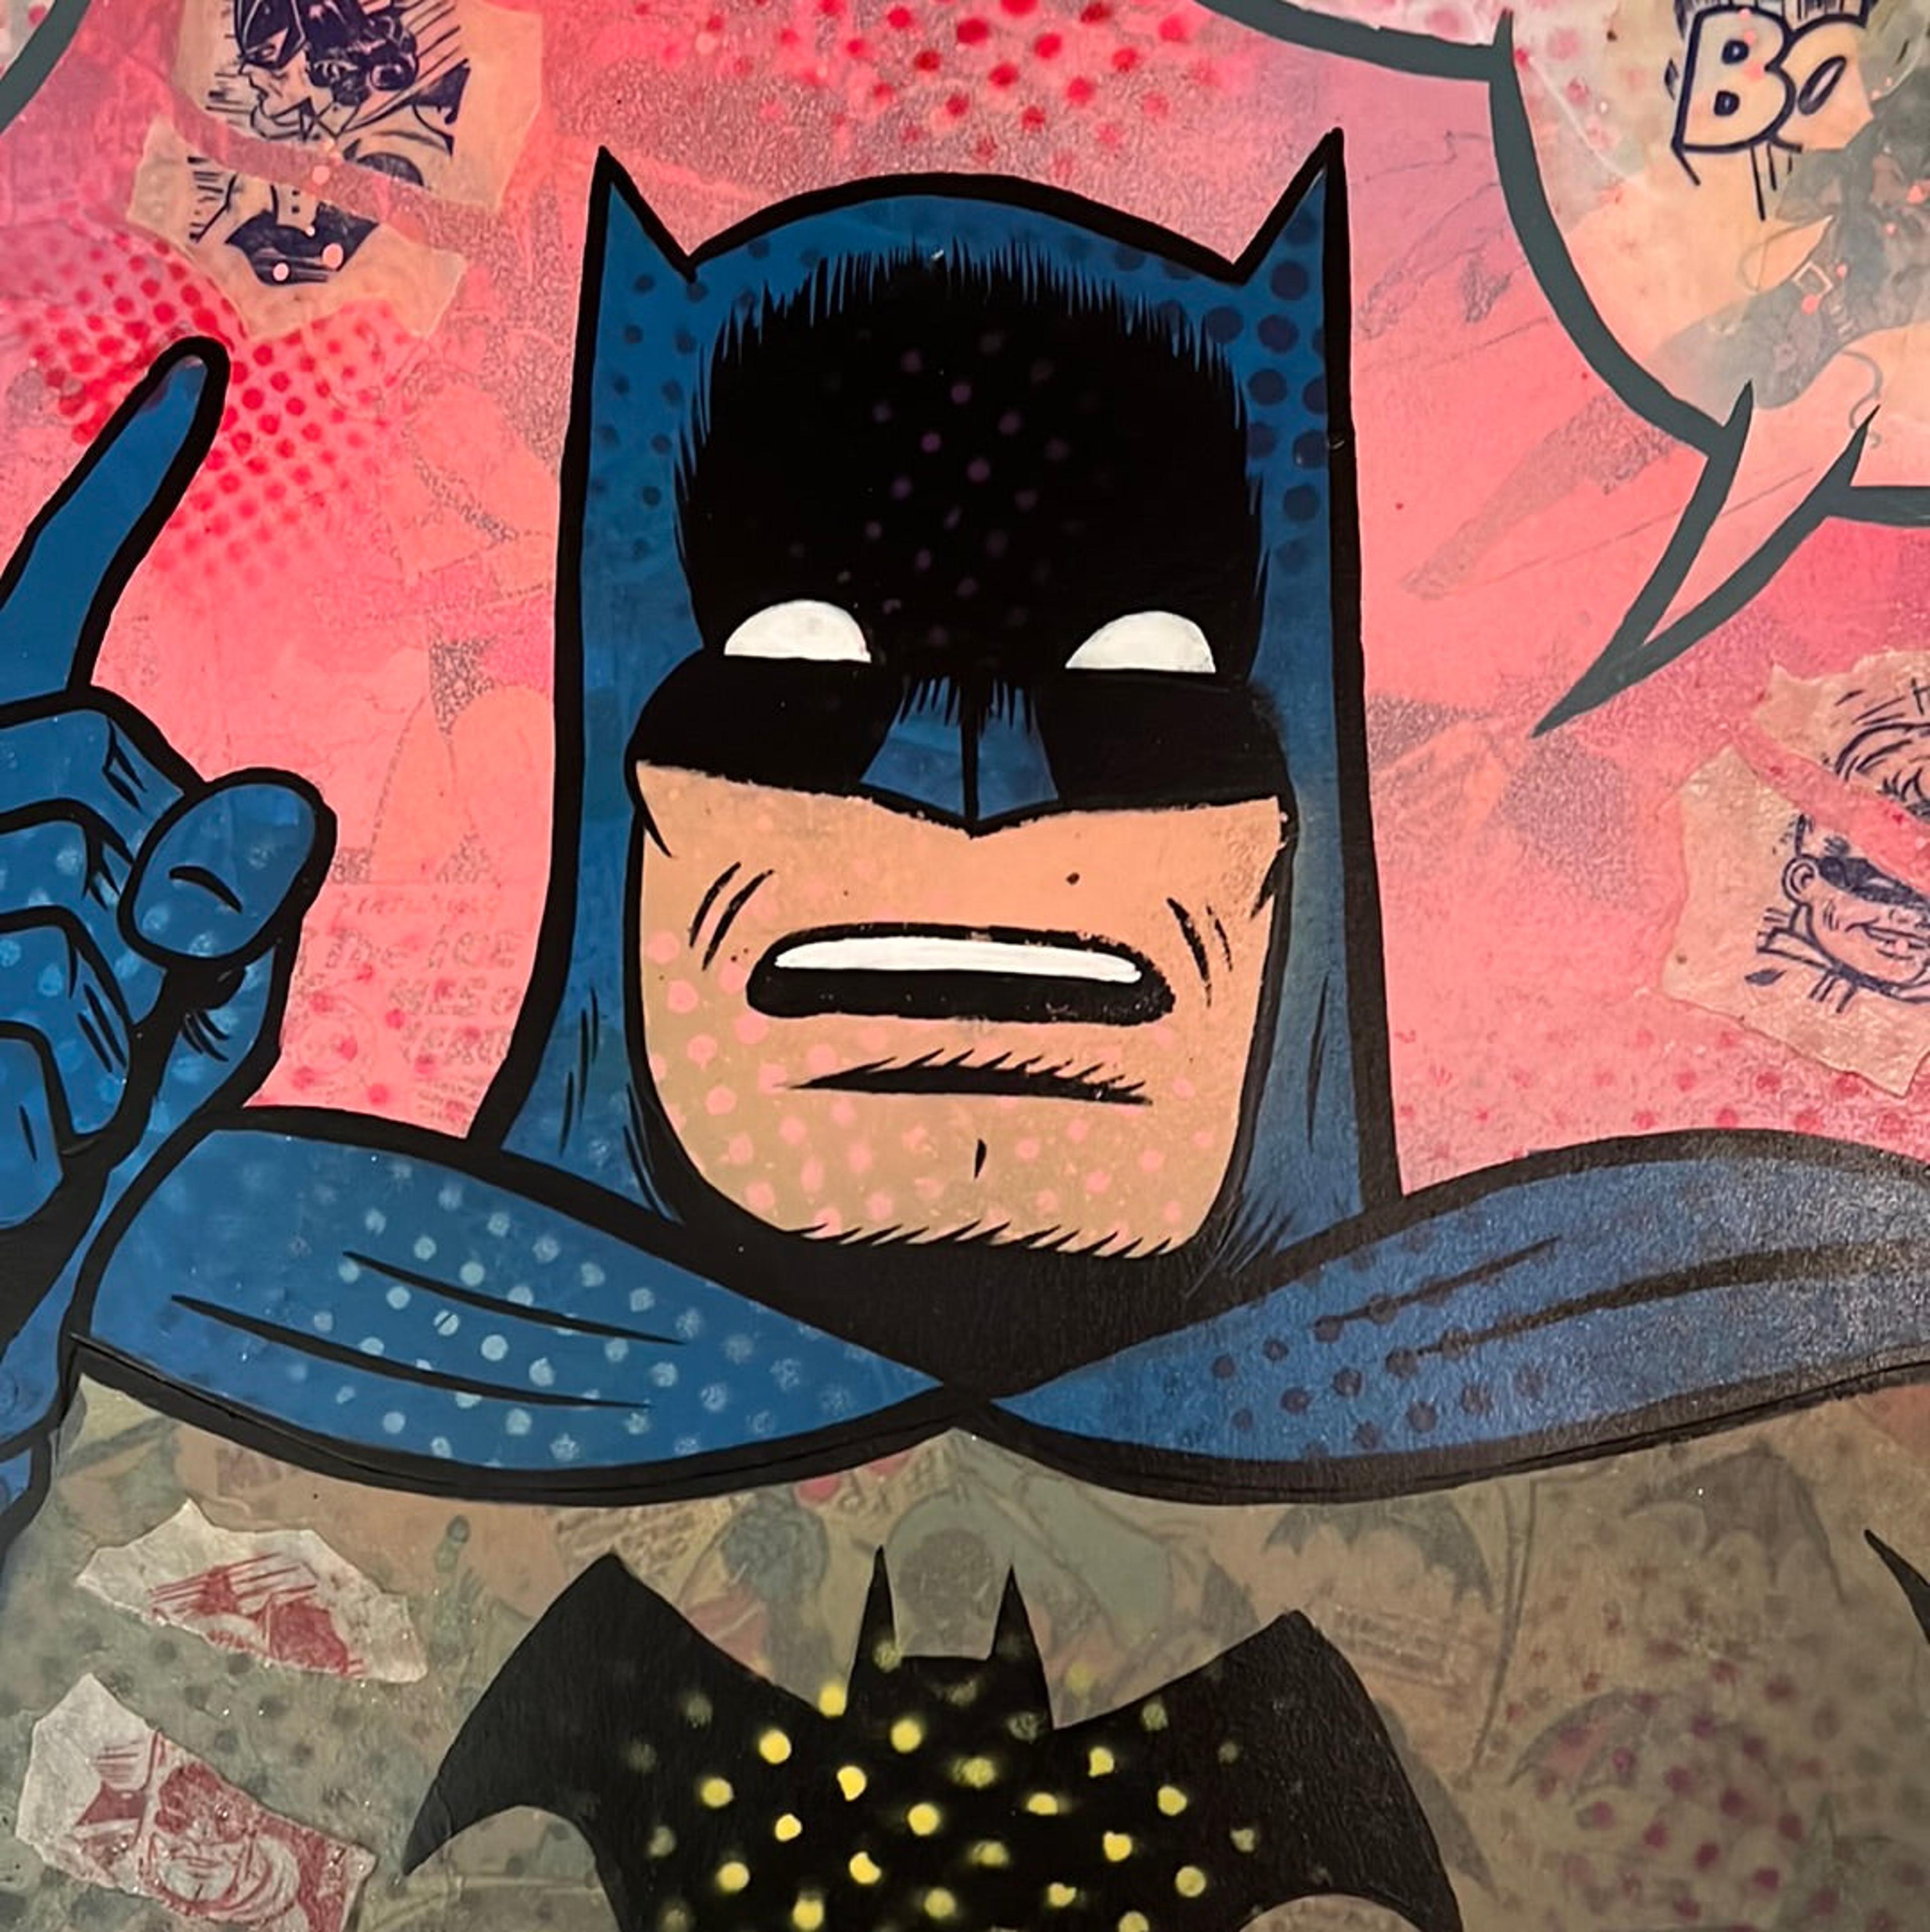 Alternate View 1 of Vintage Batman #6 original painting by Dr. Smash  12x12